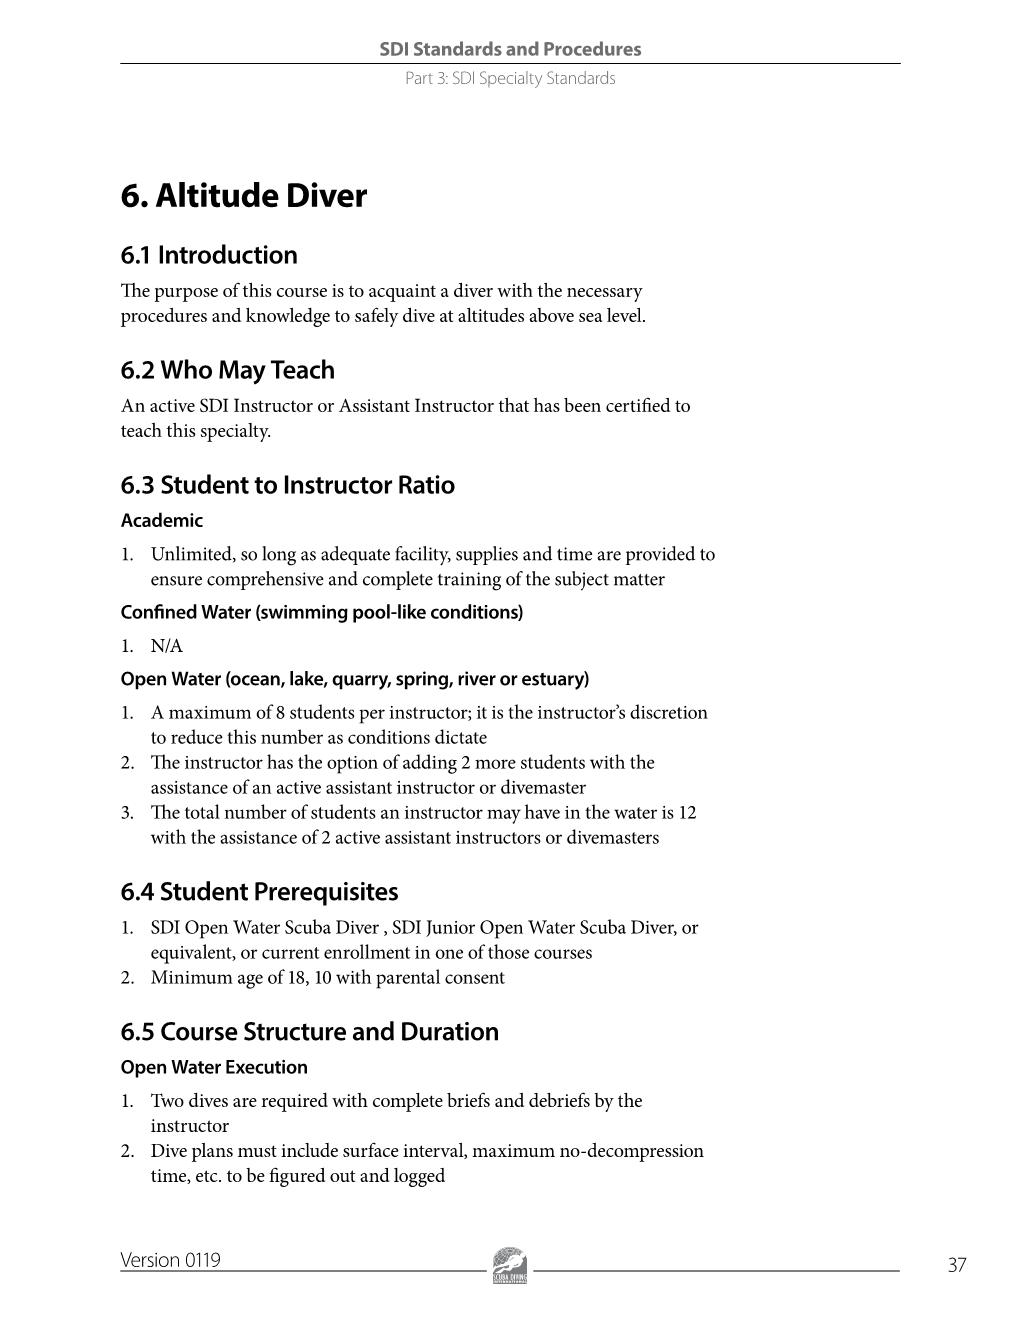 6. Altitude Diver